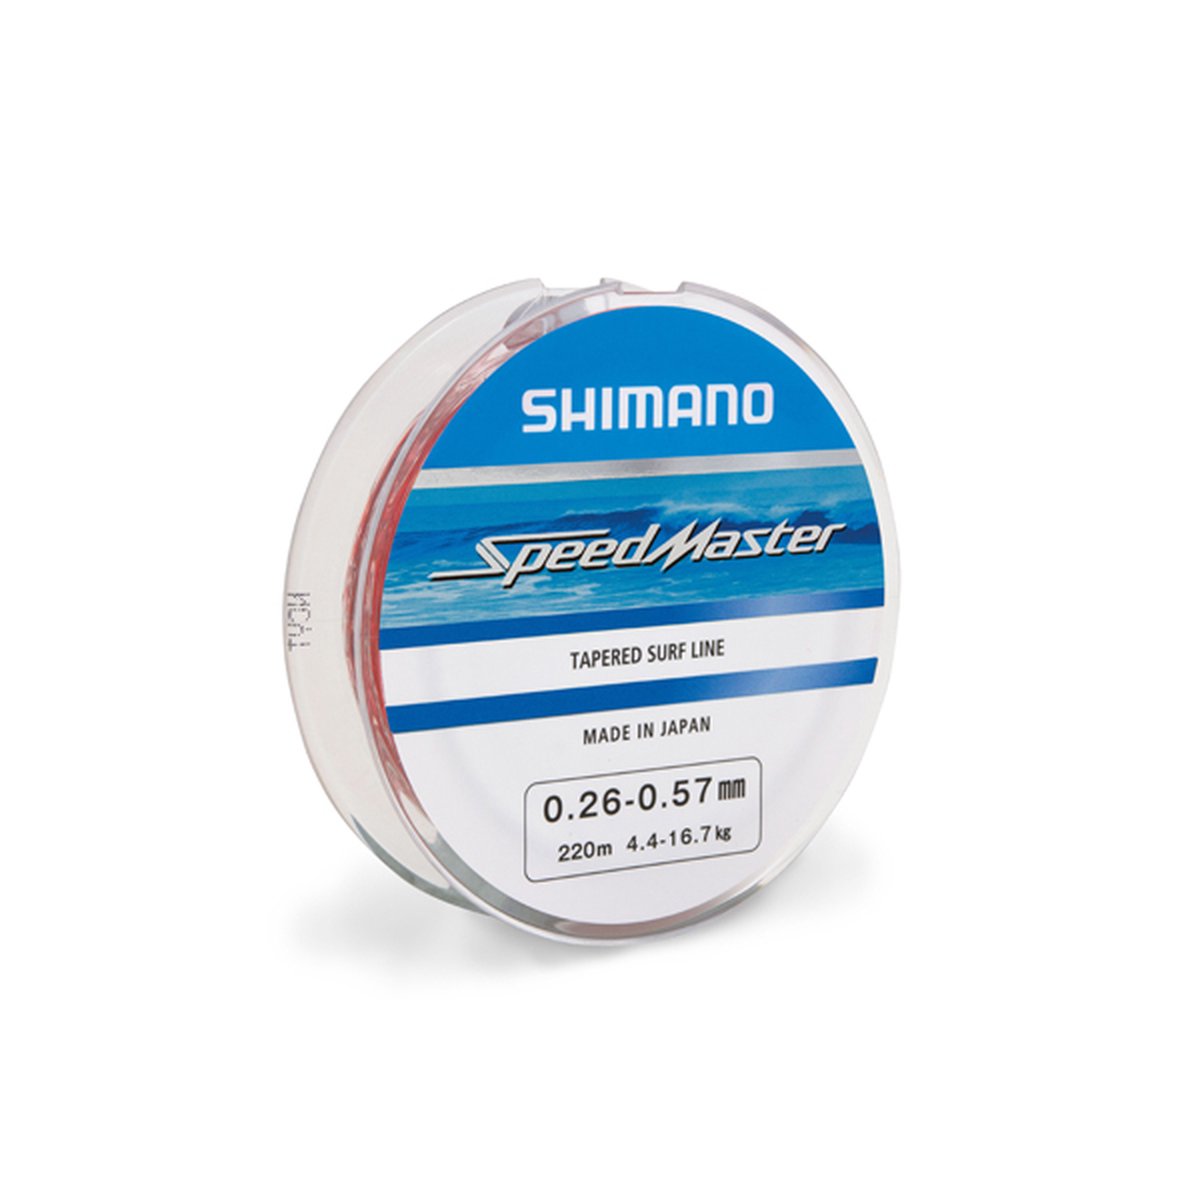 Shimano speedmaster tapered surf line 220m, 0.23-0.57mm